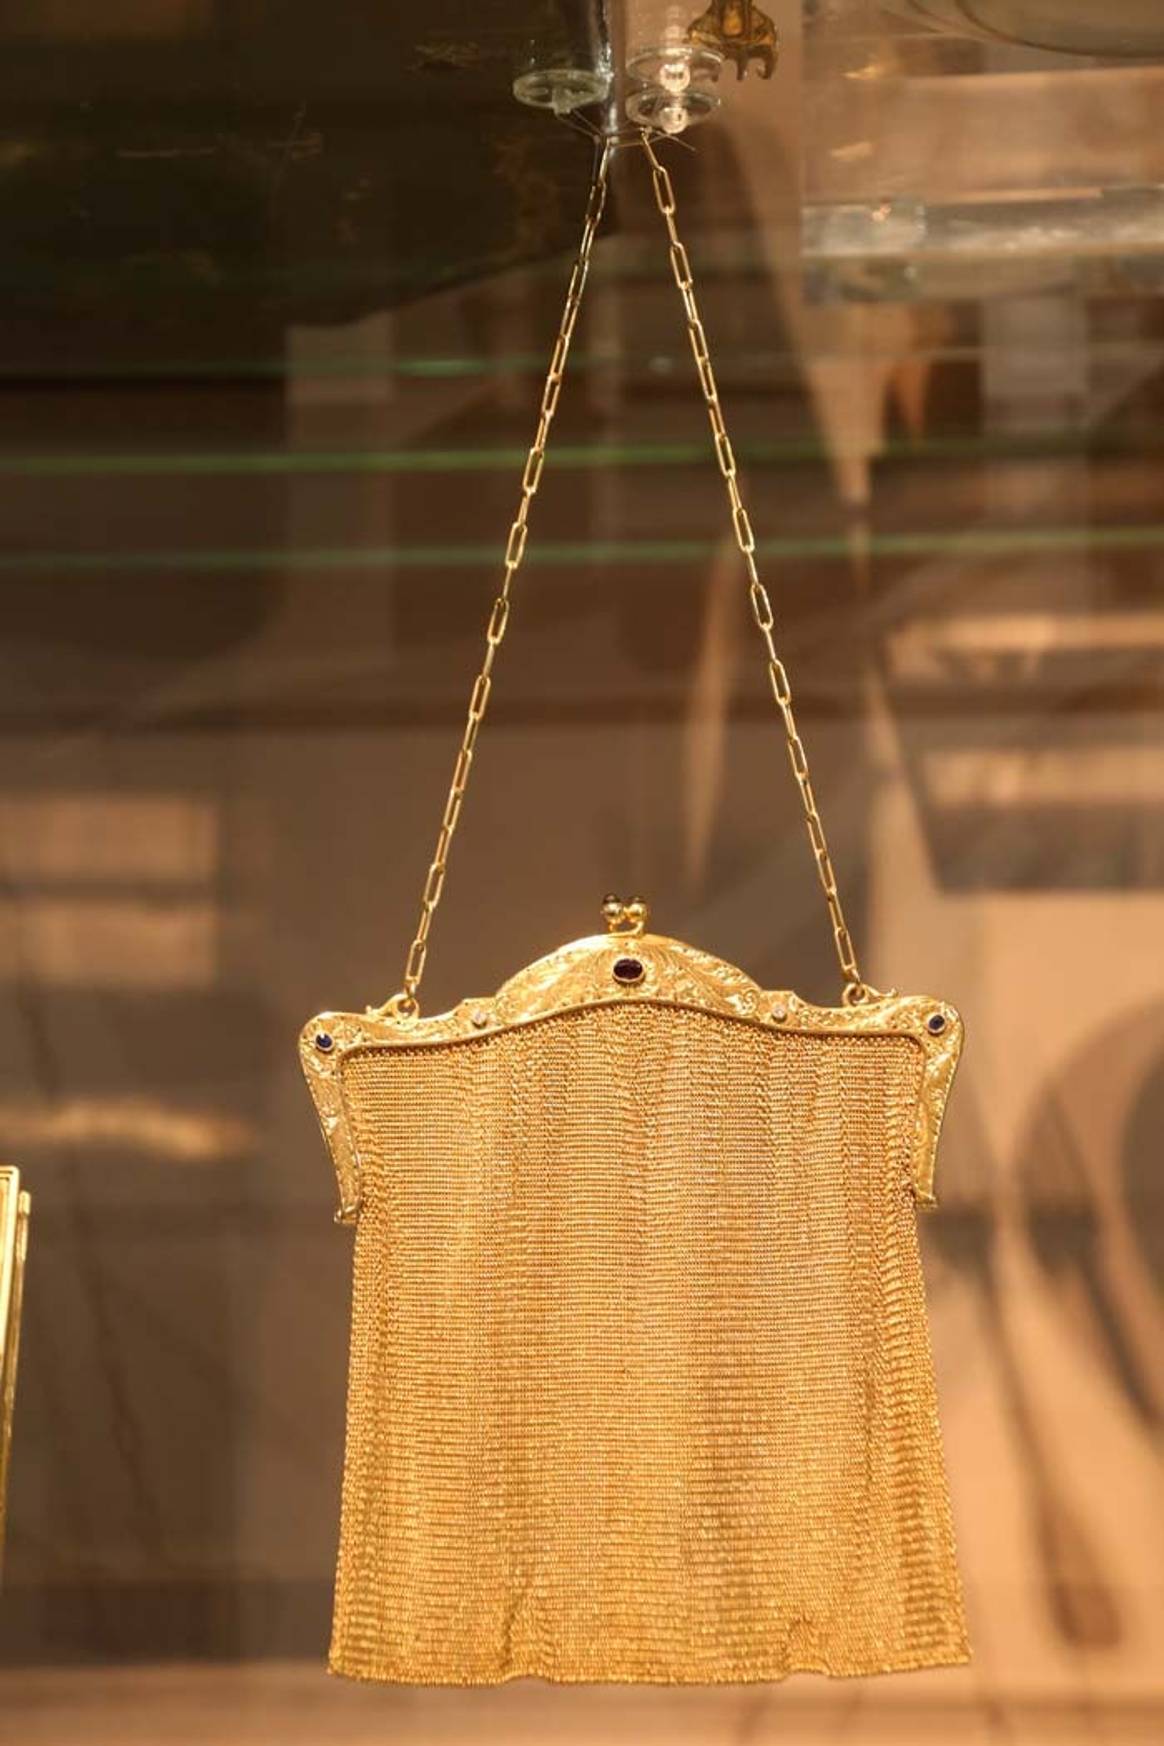 Kijken: tentoonstelling Royal Bags in Tassenmuseum Hendrikje